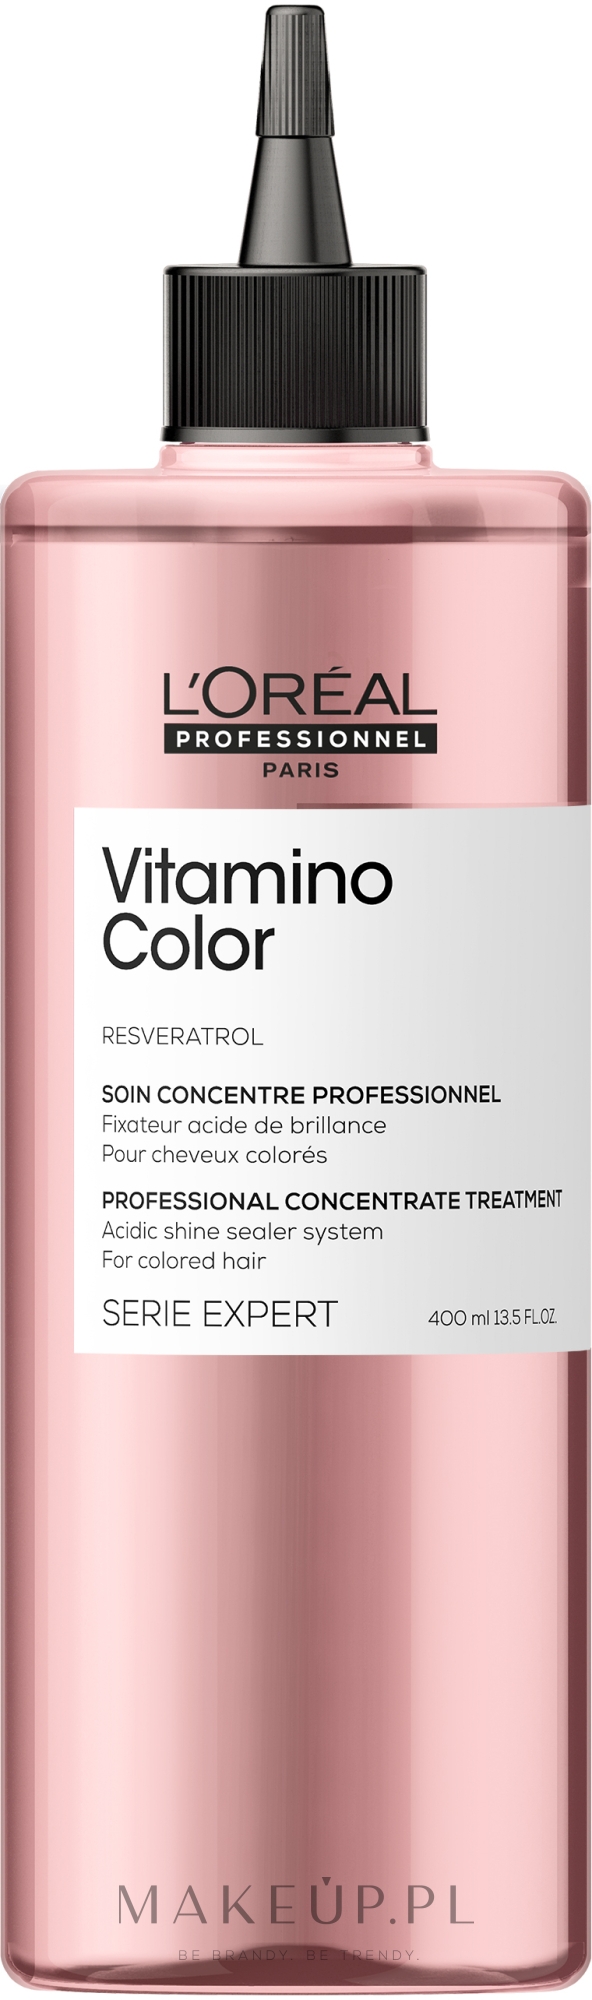 Profesjonalny koncentrat do włosów farbowanych - L'Oreal Professionnel Serie Expert Vitamino Color Resveratrol Concentrate Treatment — Zdjęcie 400 ml